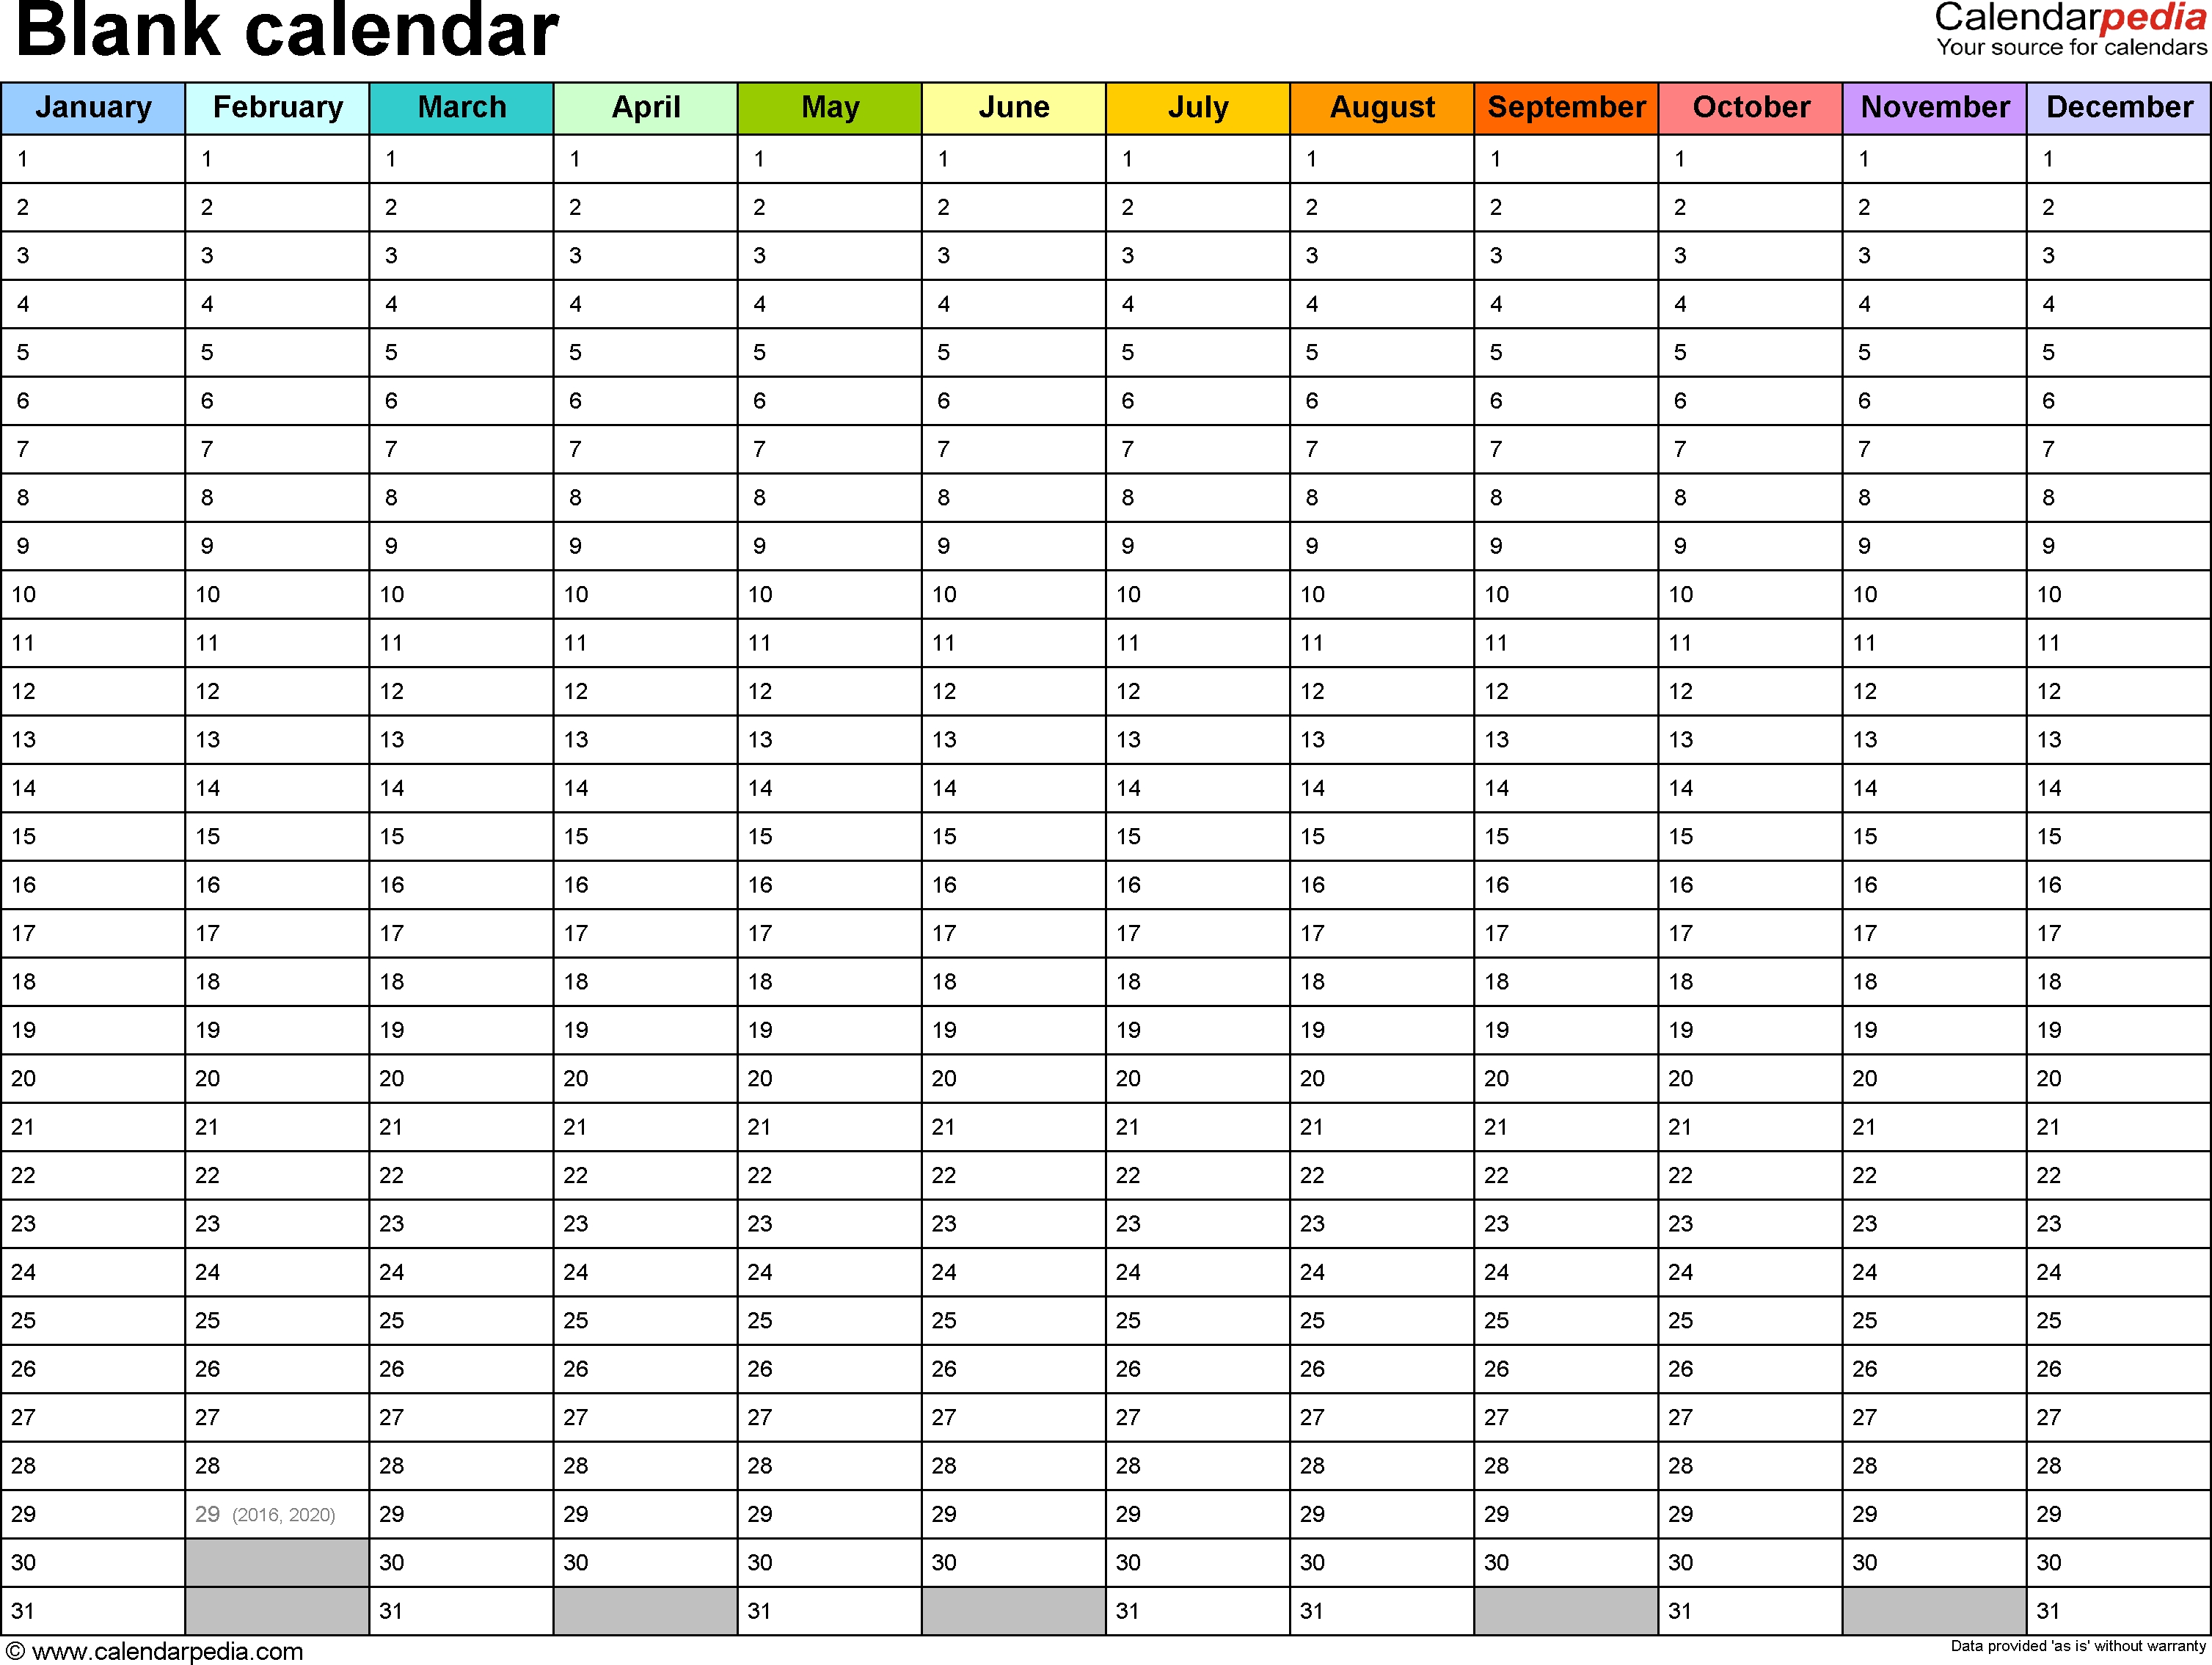 Blank Calendar - 9 Free Printable Microsoft Word Templates inside Free Printable 12 Month Blank Calendar